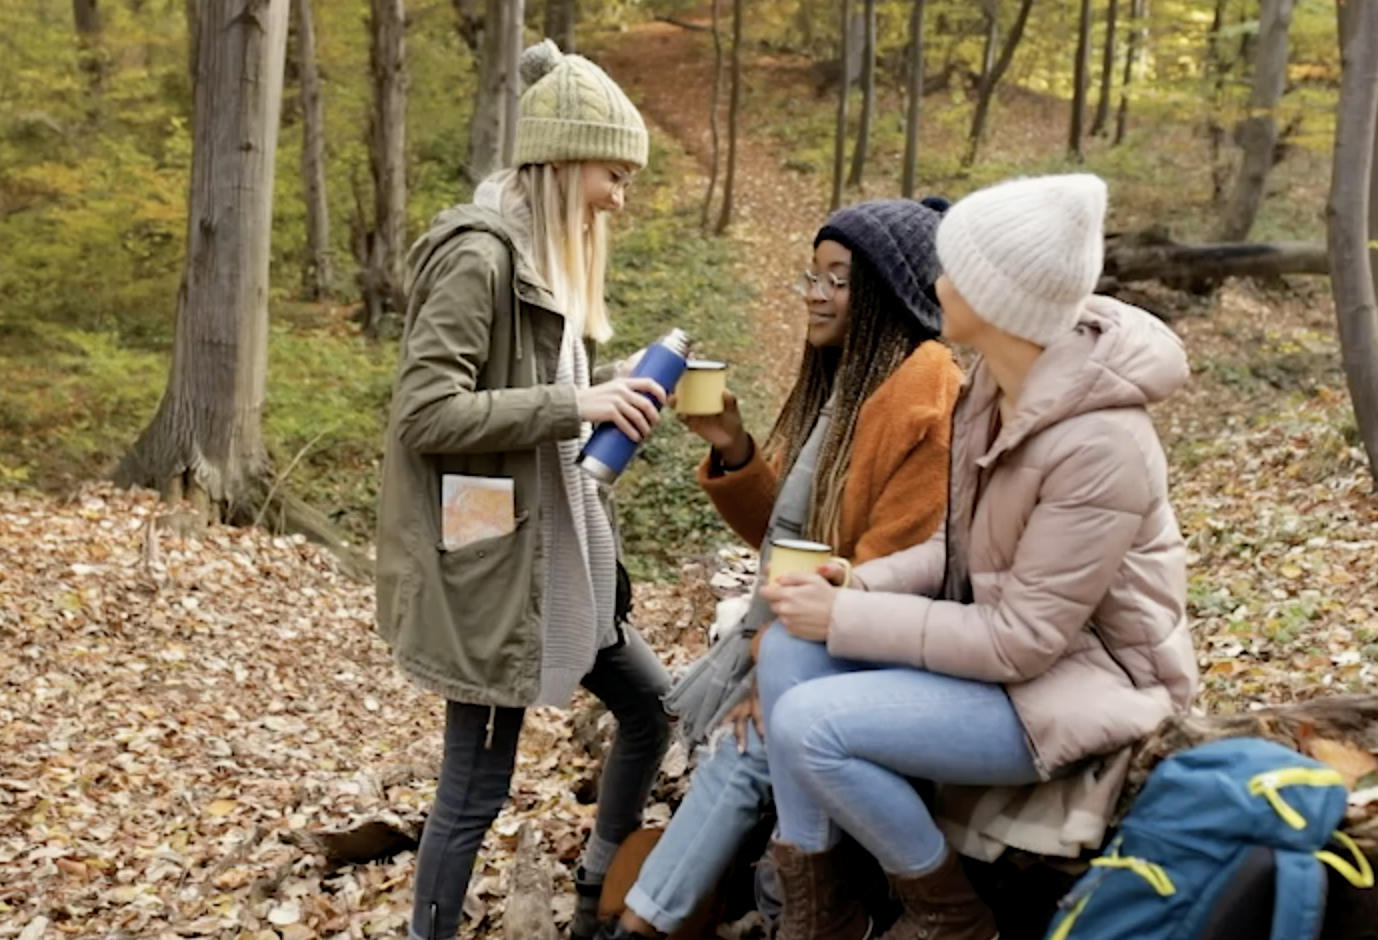 Three female friends having fun and enjoying hiking in forest.